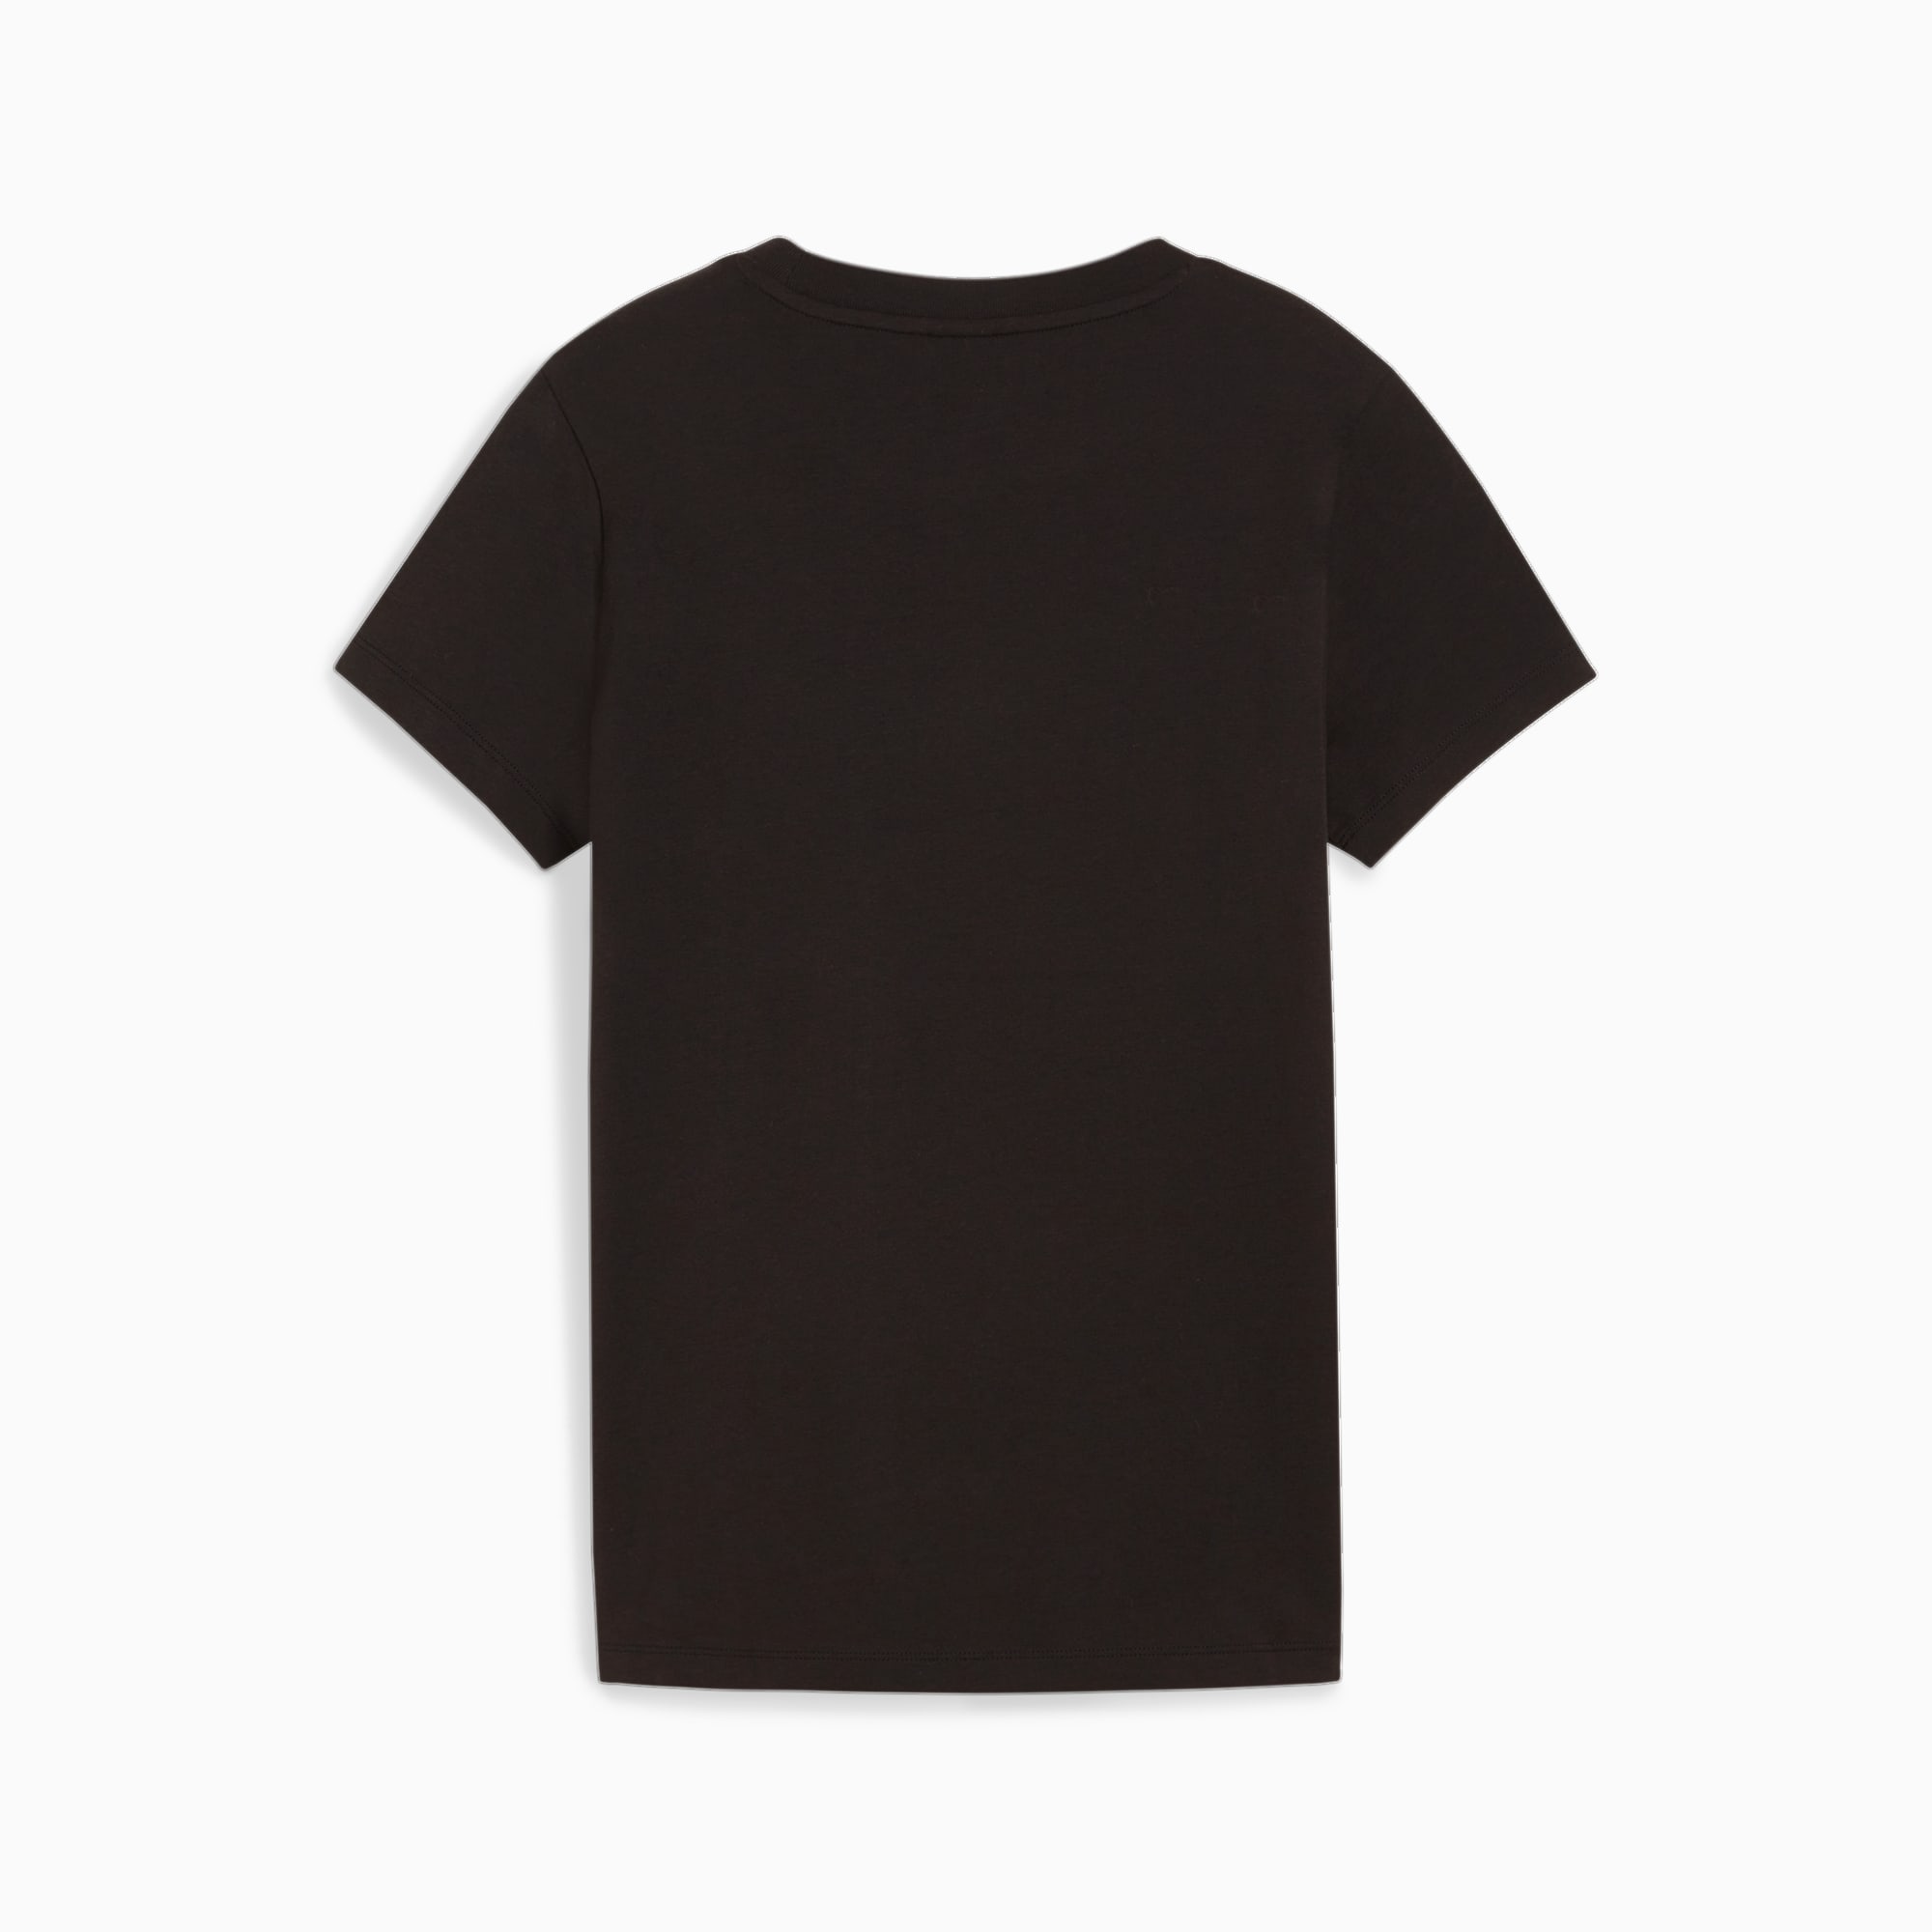 PUMA Classics Shiny Logo Women's T-Shirt, Black, Size S, Clothing